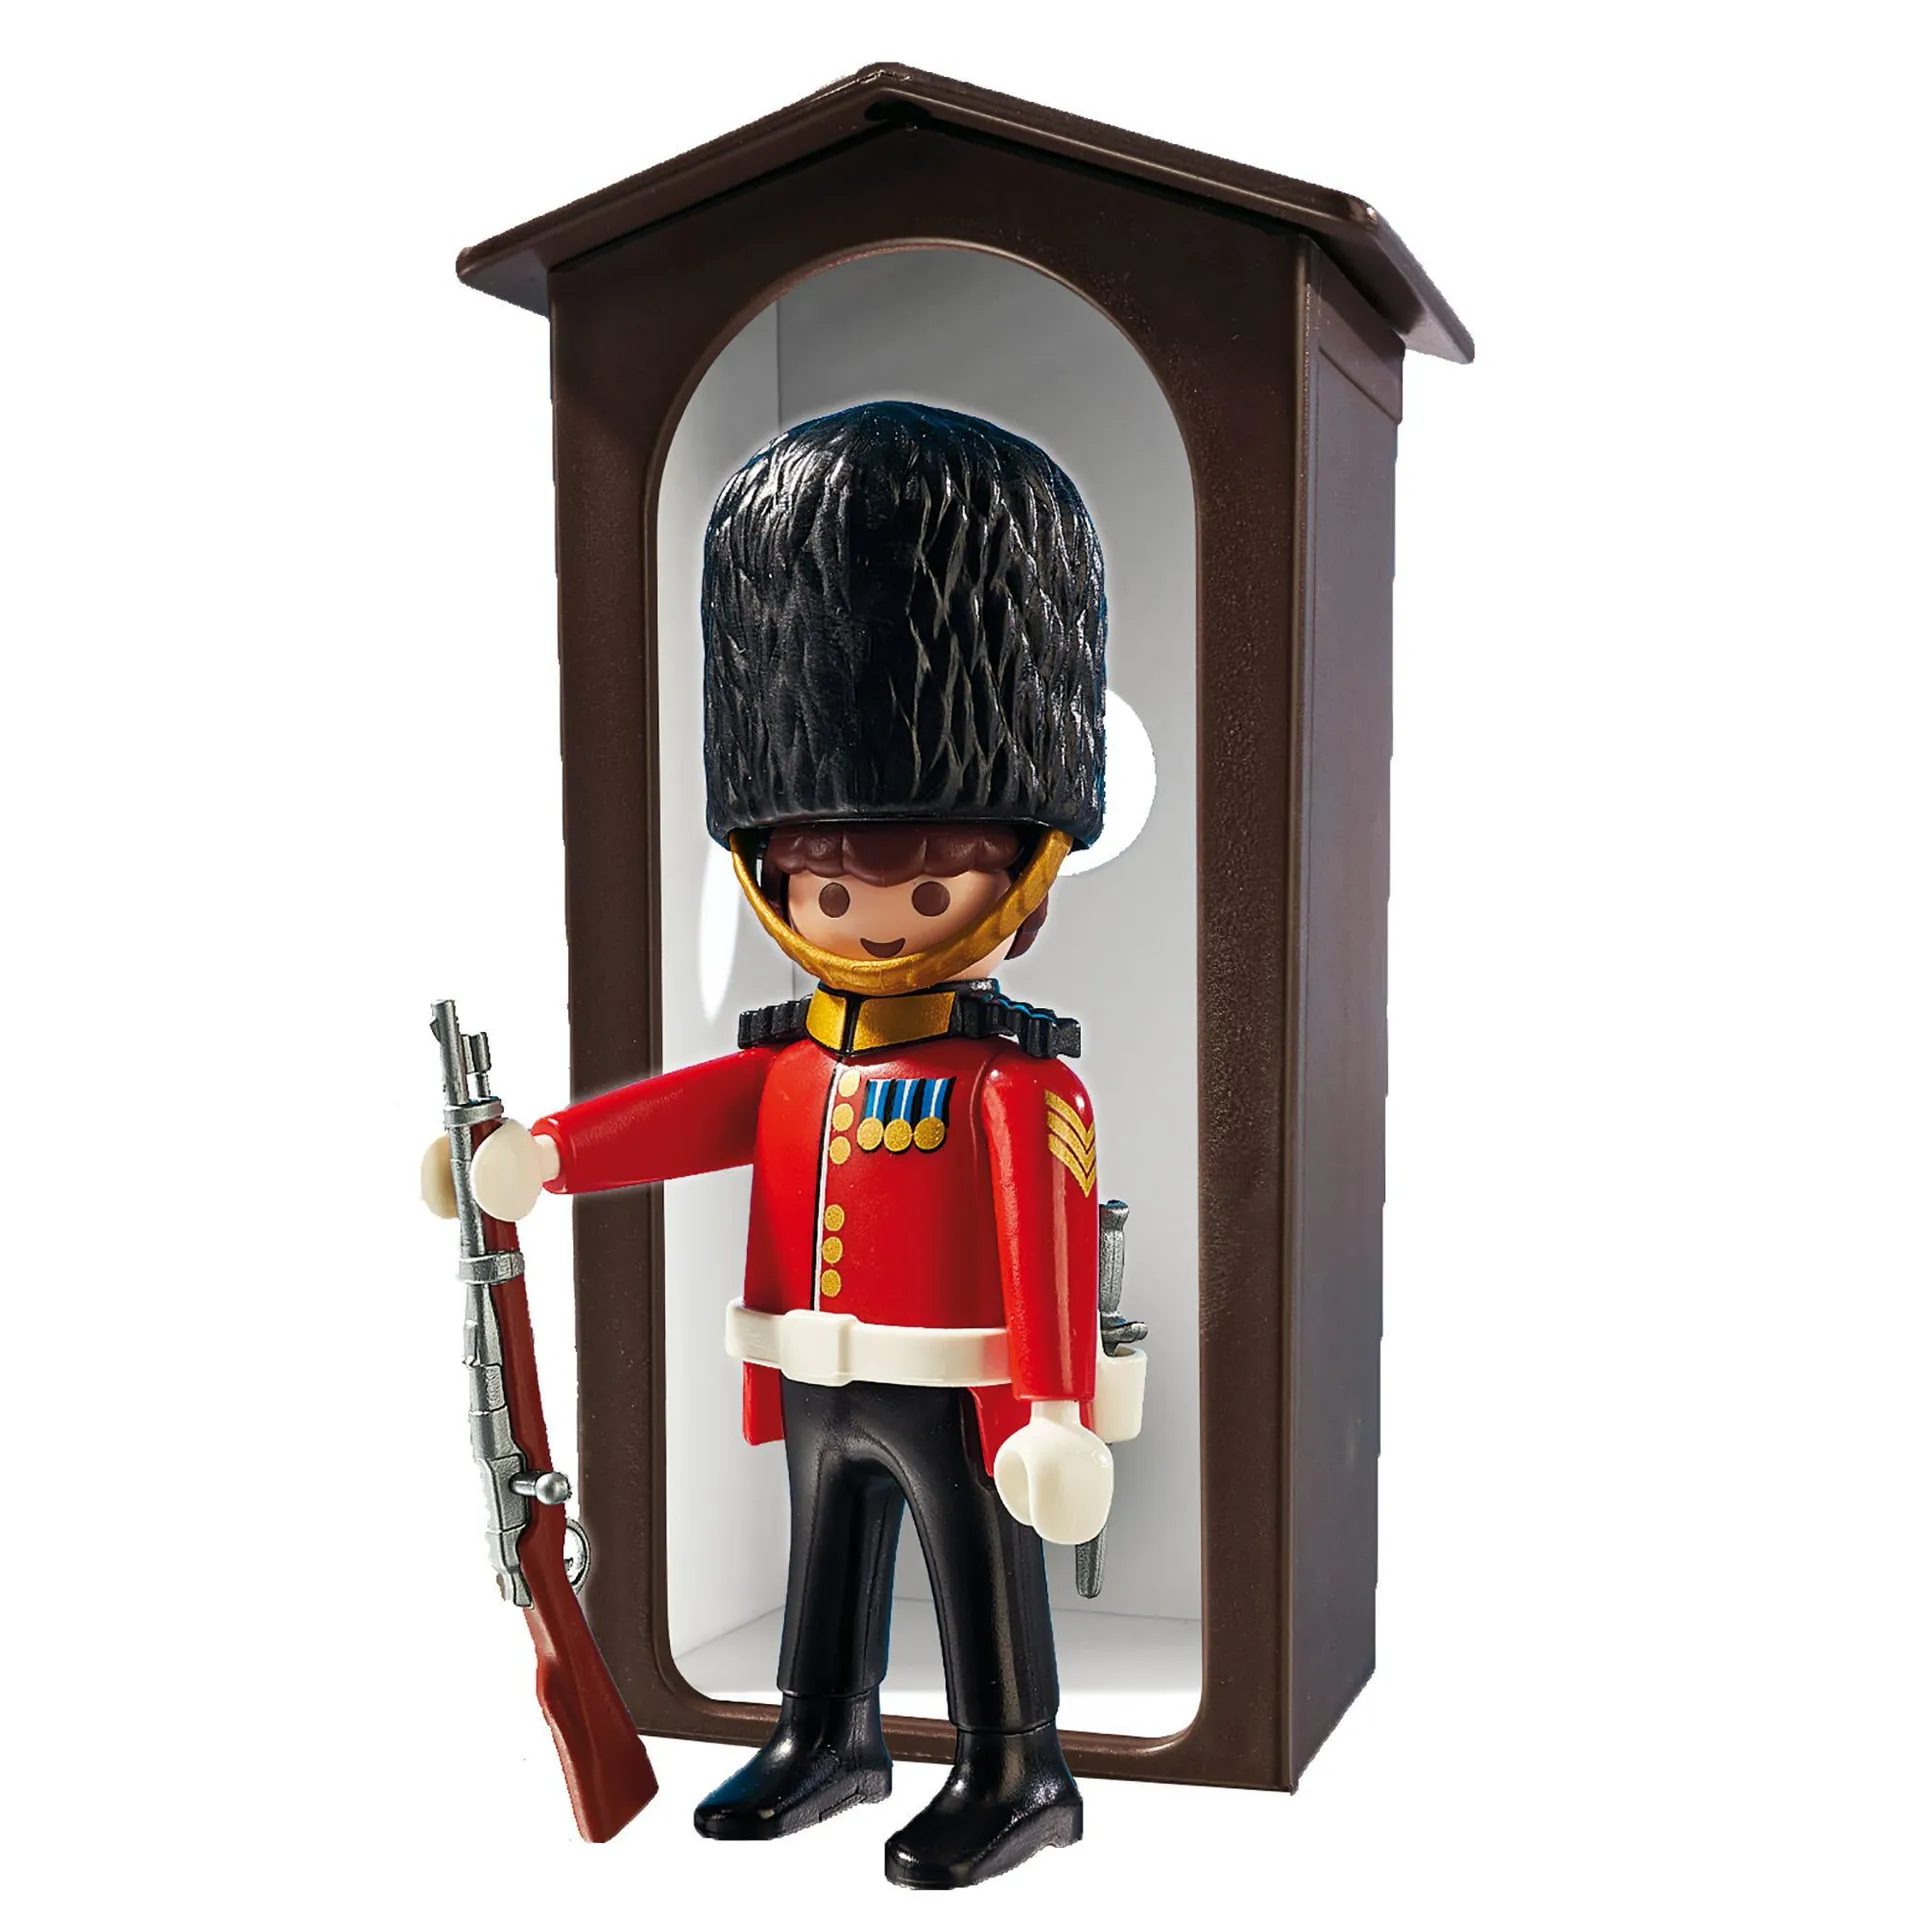 Playmobil Royal Guard With Sentry Box 9050